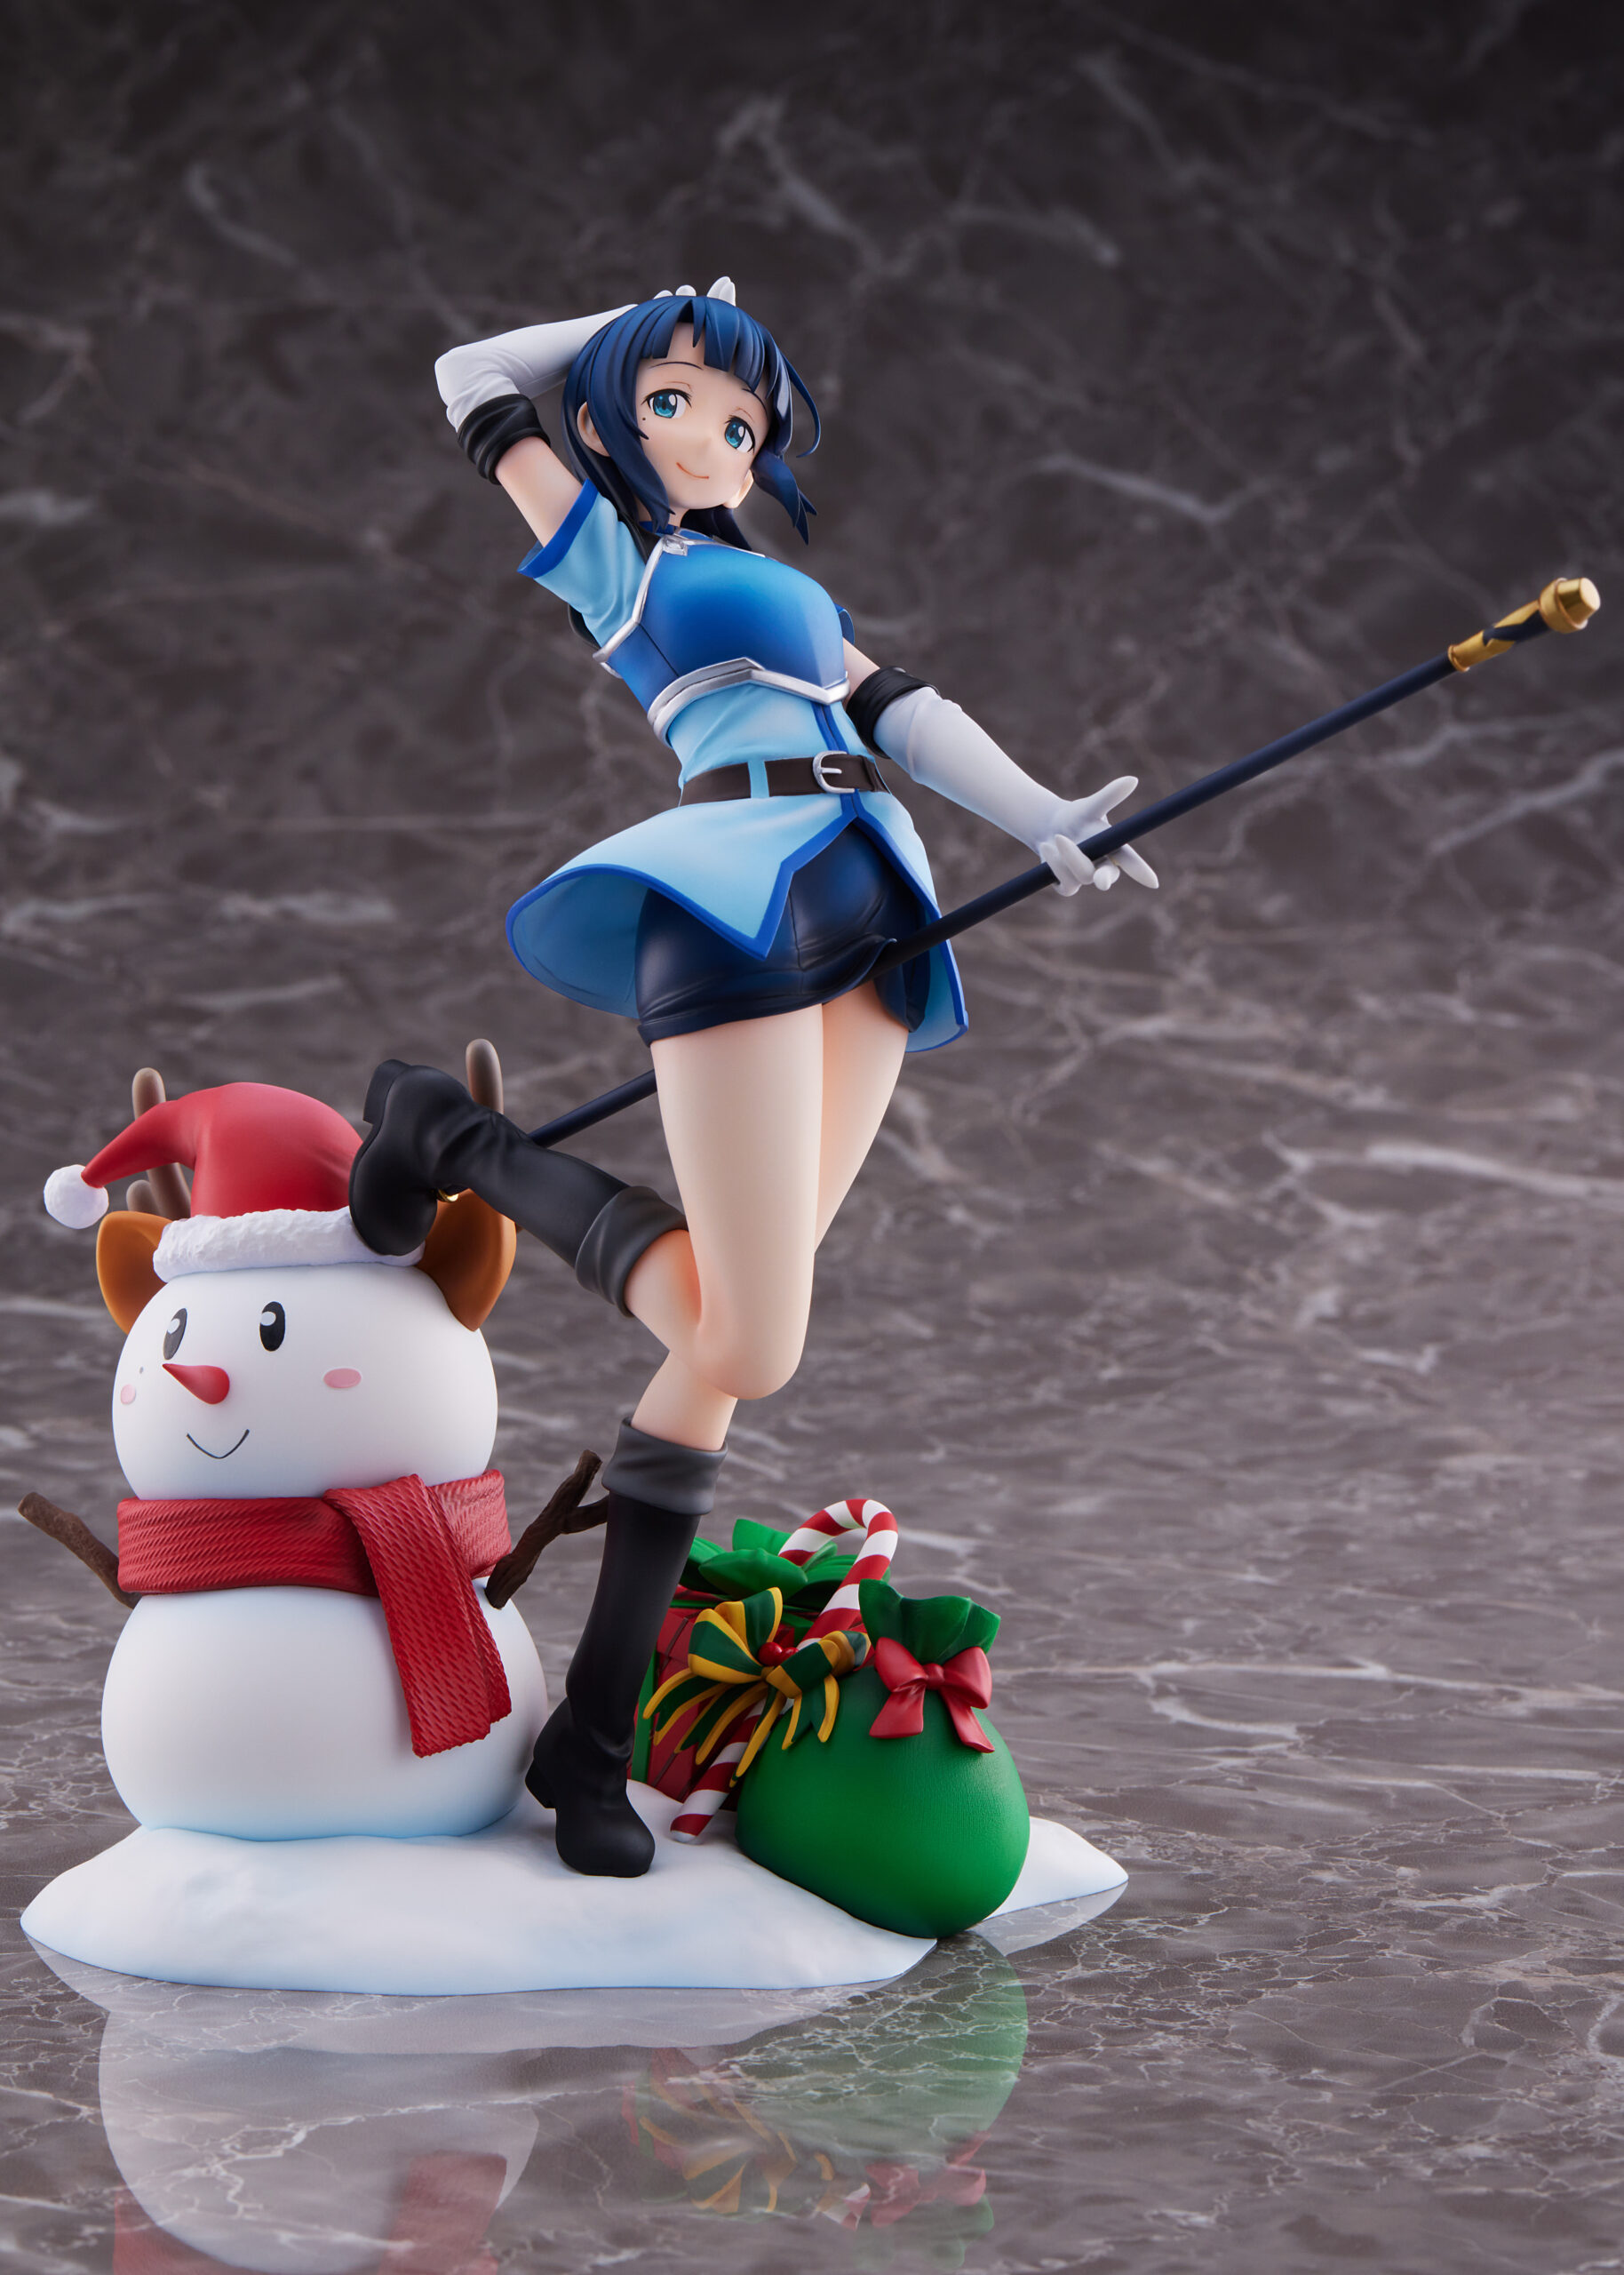 Sachi with Lance Guild Moonlit Black Cats SAO Sword Art Online 1/7 Scale Christmas Figure Alice Glint